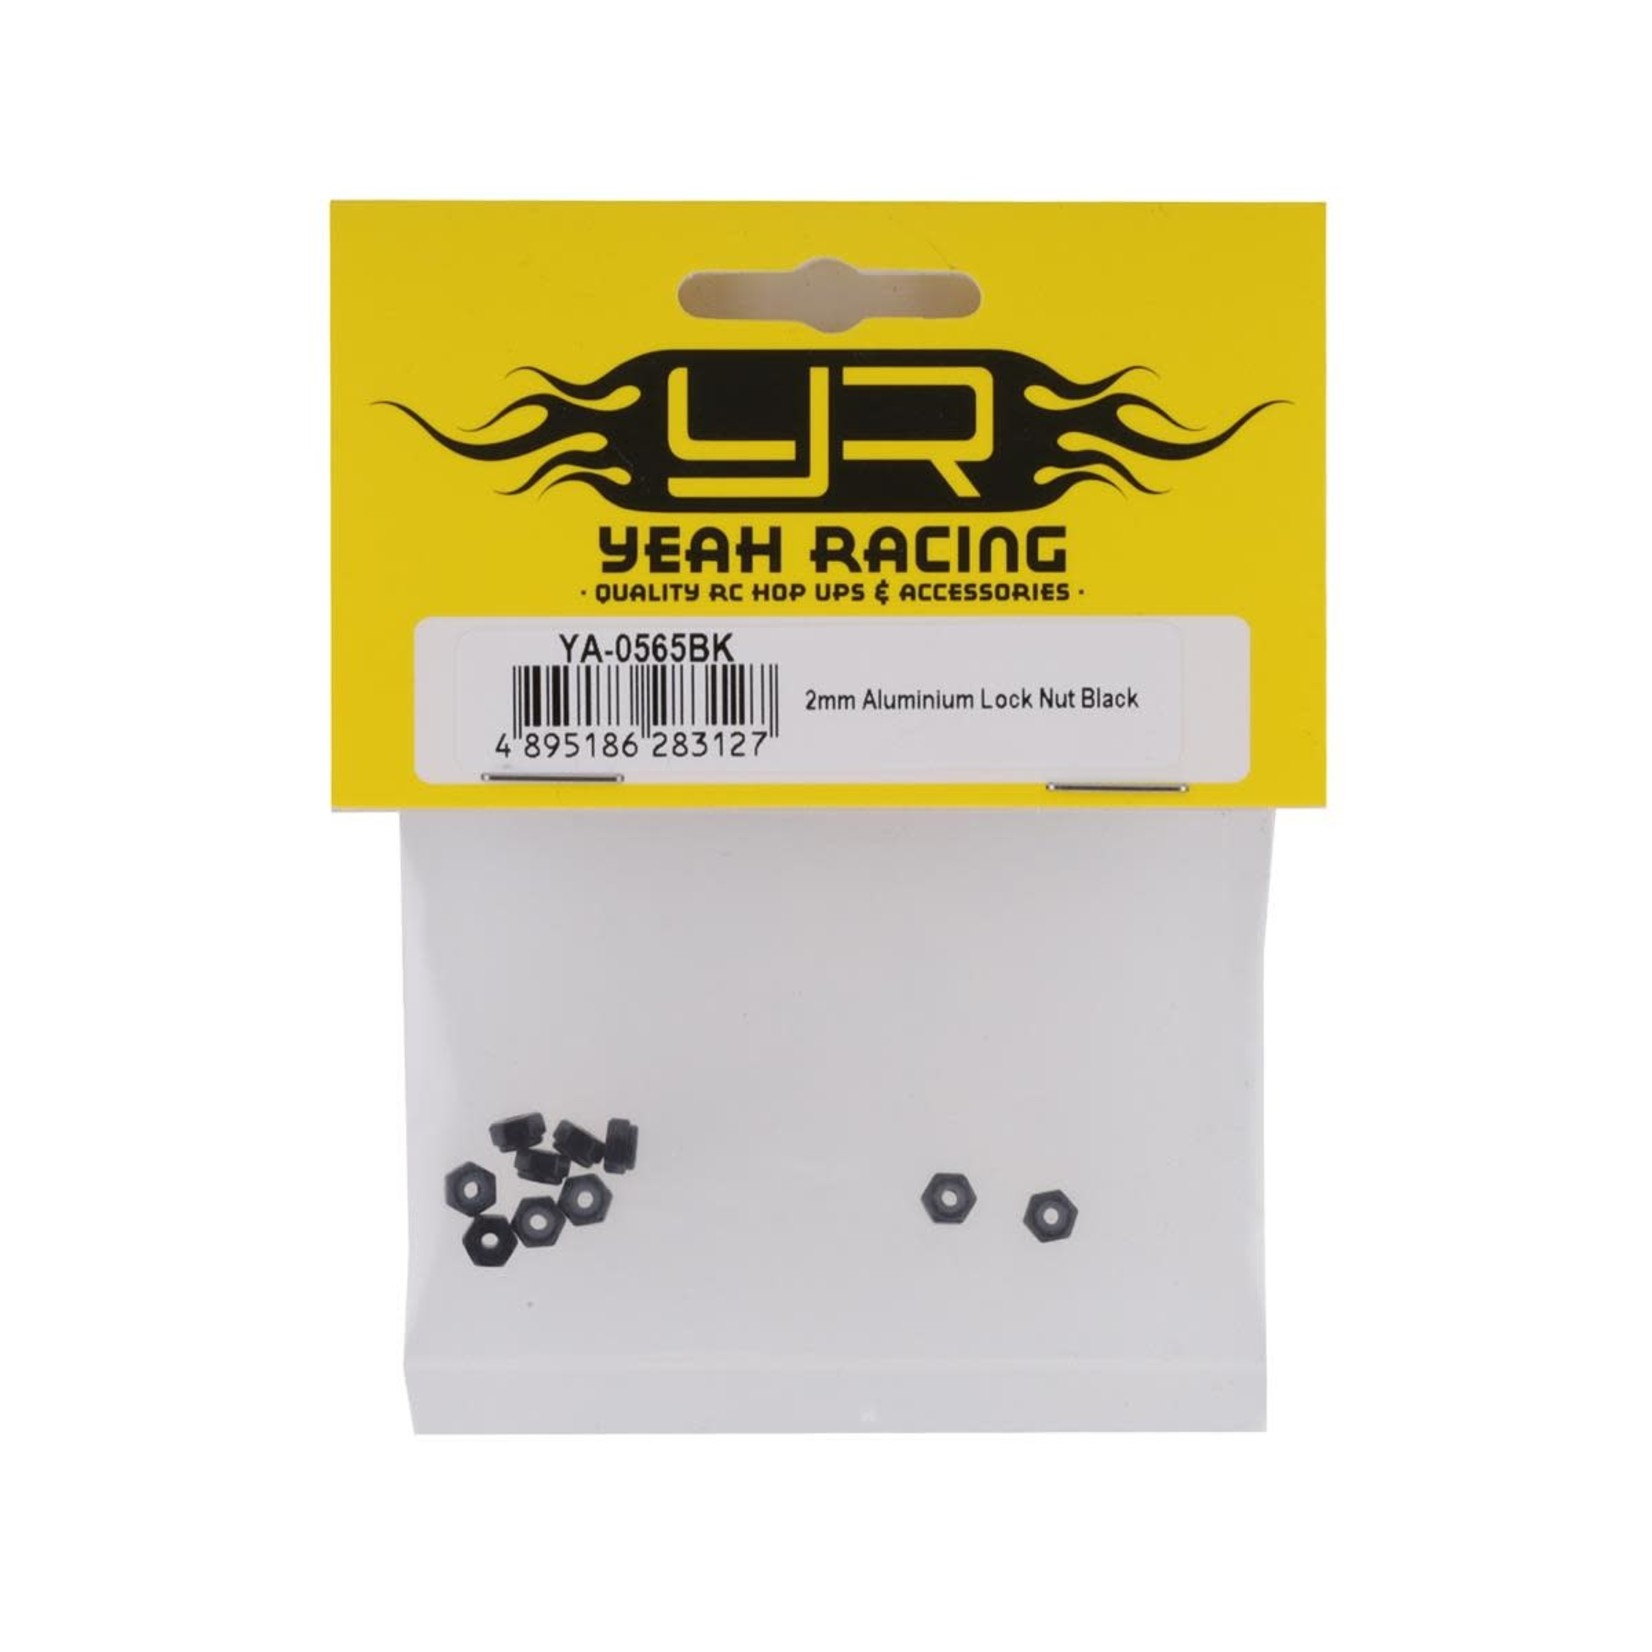 Yeah Racing Yeah Racing 2mm Aluminum Lock Nut (Black) (10) #YA-0565BK